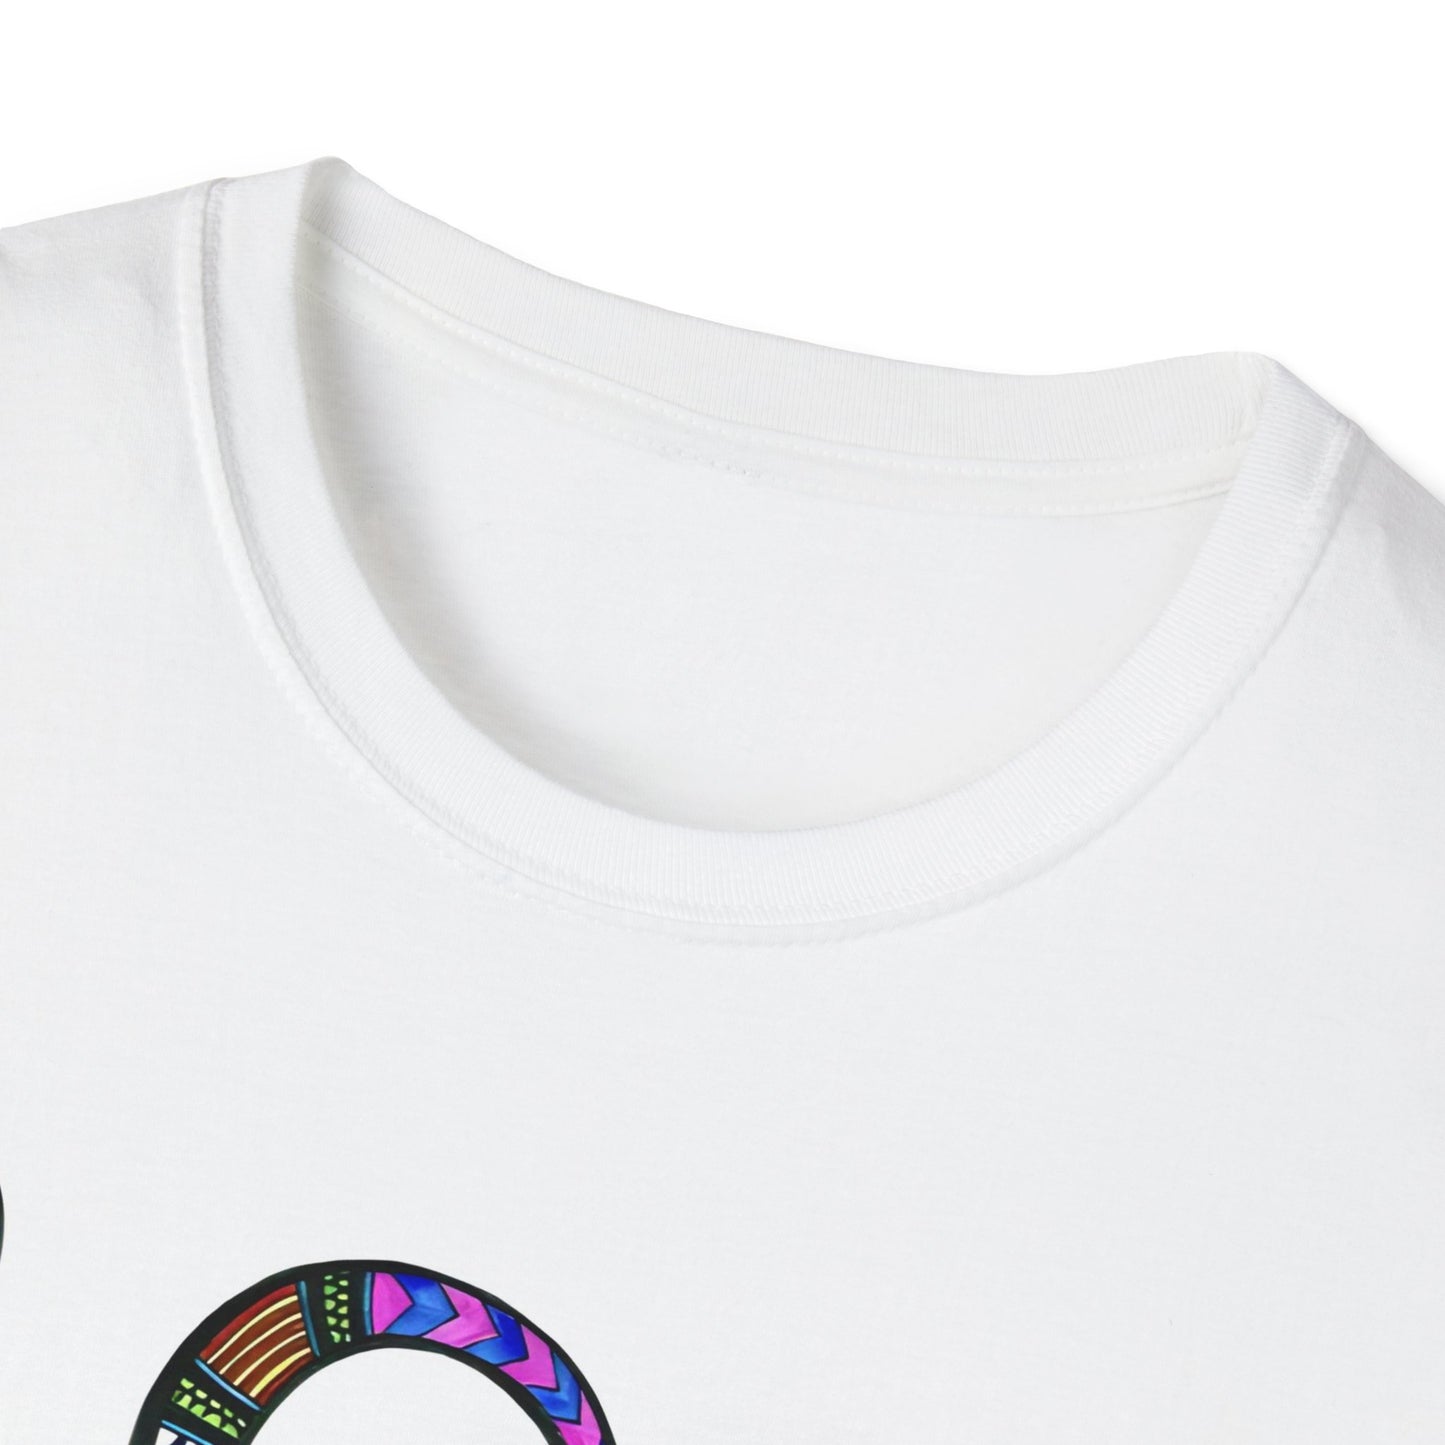 Peace Love - Unisex Softstyle T-Shirt - Bobby Nathan Band Design #001